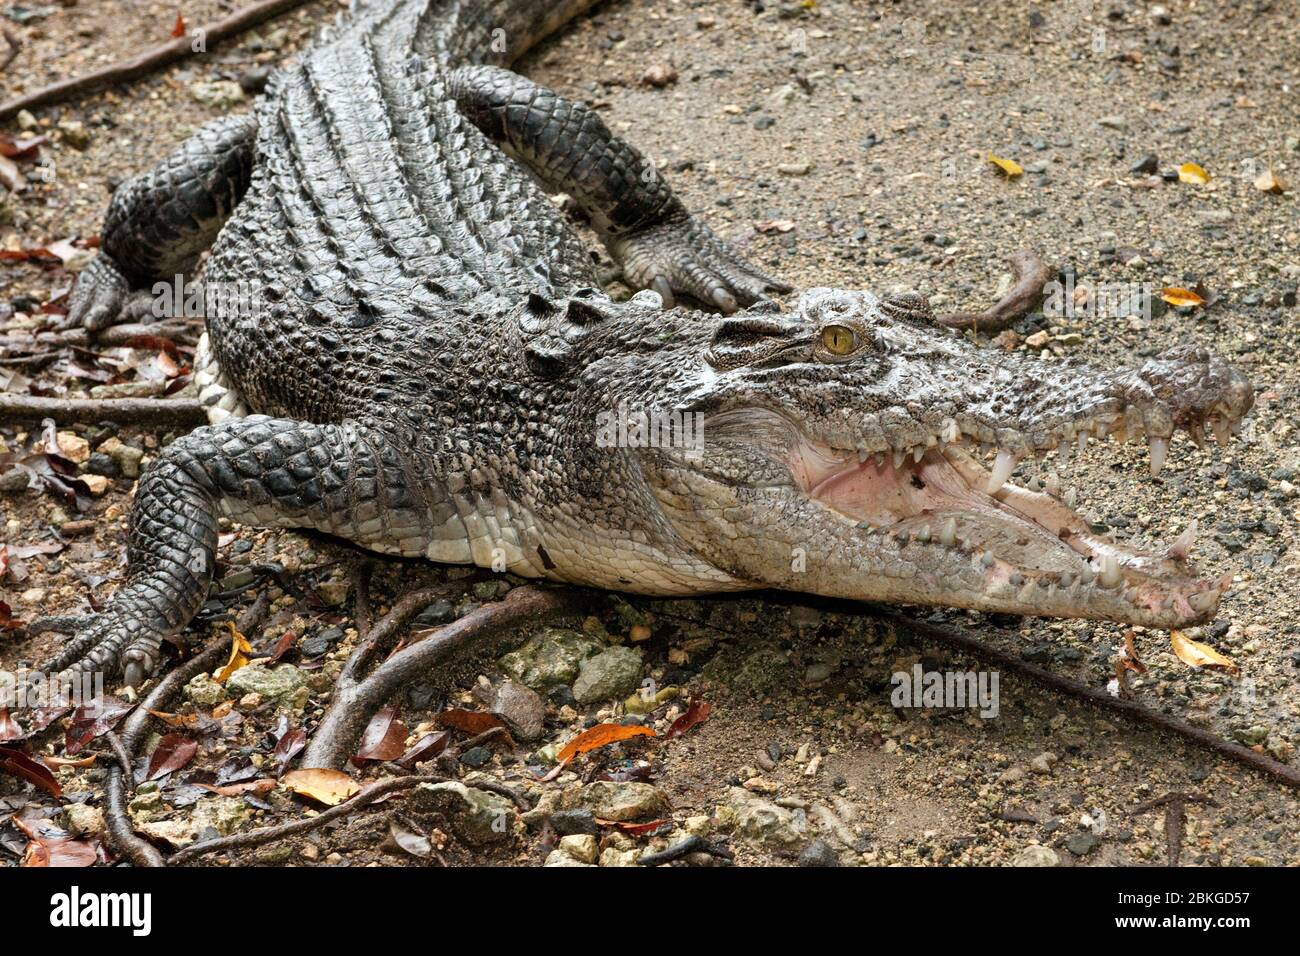 Leistenkrokodil, Salzwasserkrokodil (Crocodylus porosus) faucht und reißt Maul auf, Australien Foto Stock